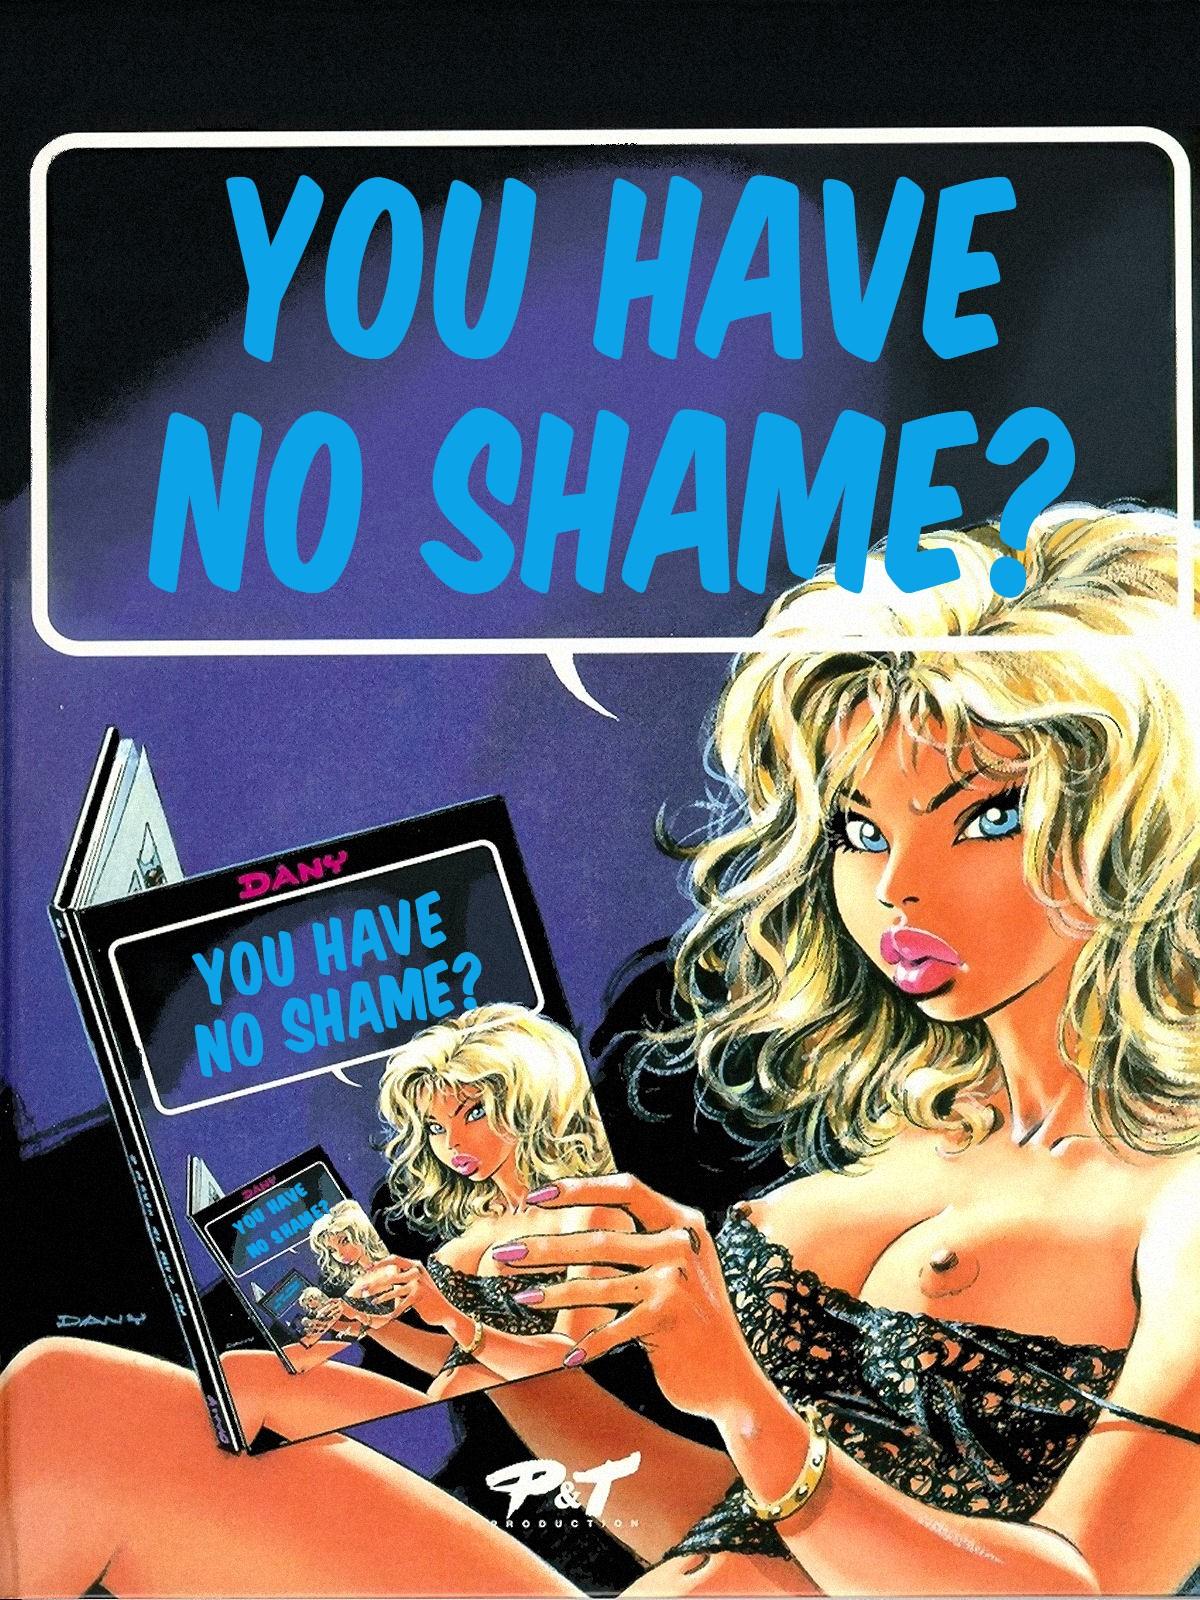 DANY - YOU HAVE NO SHAME